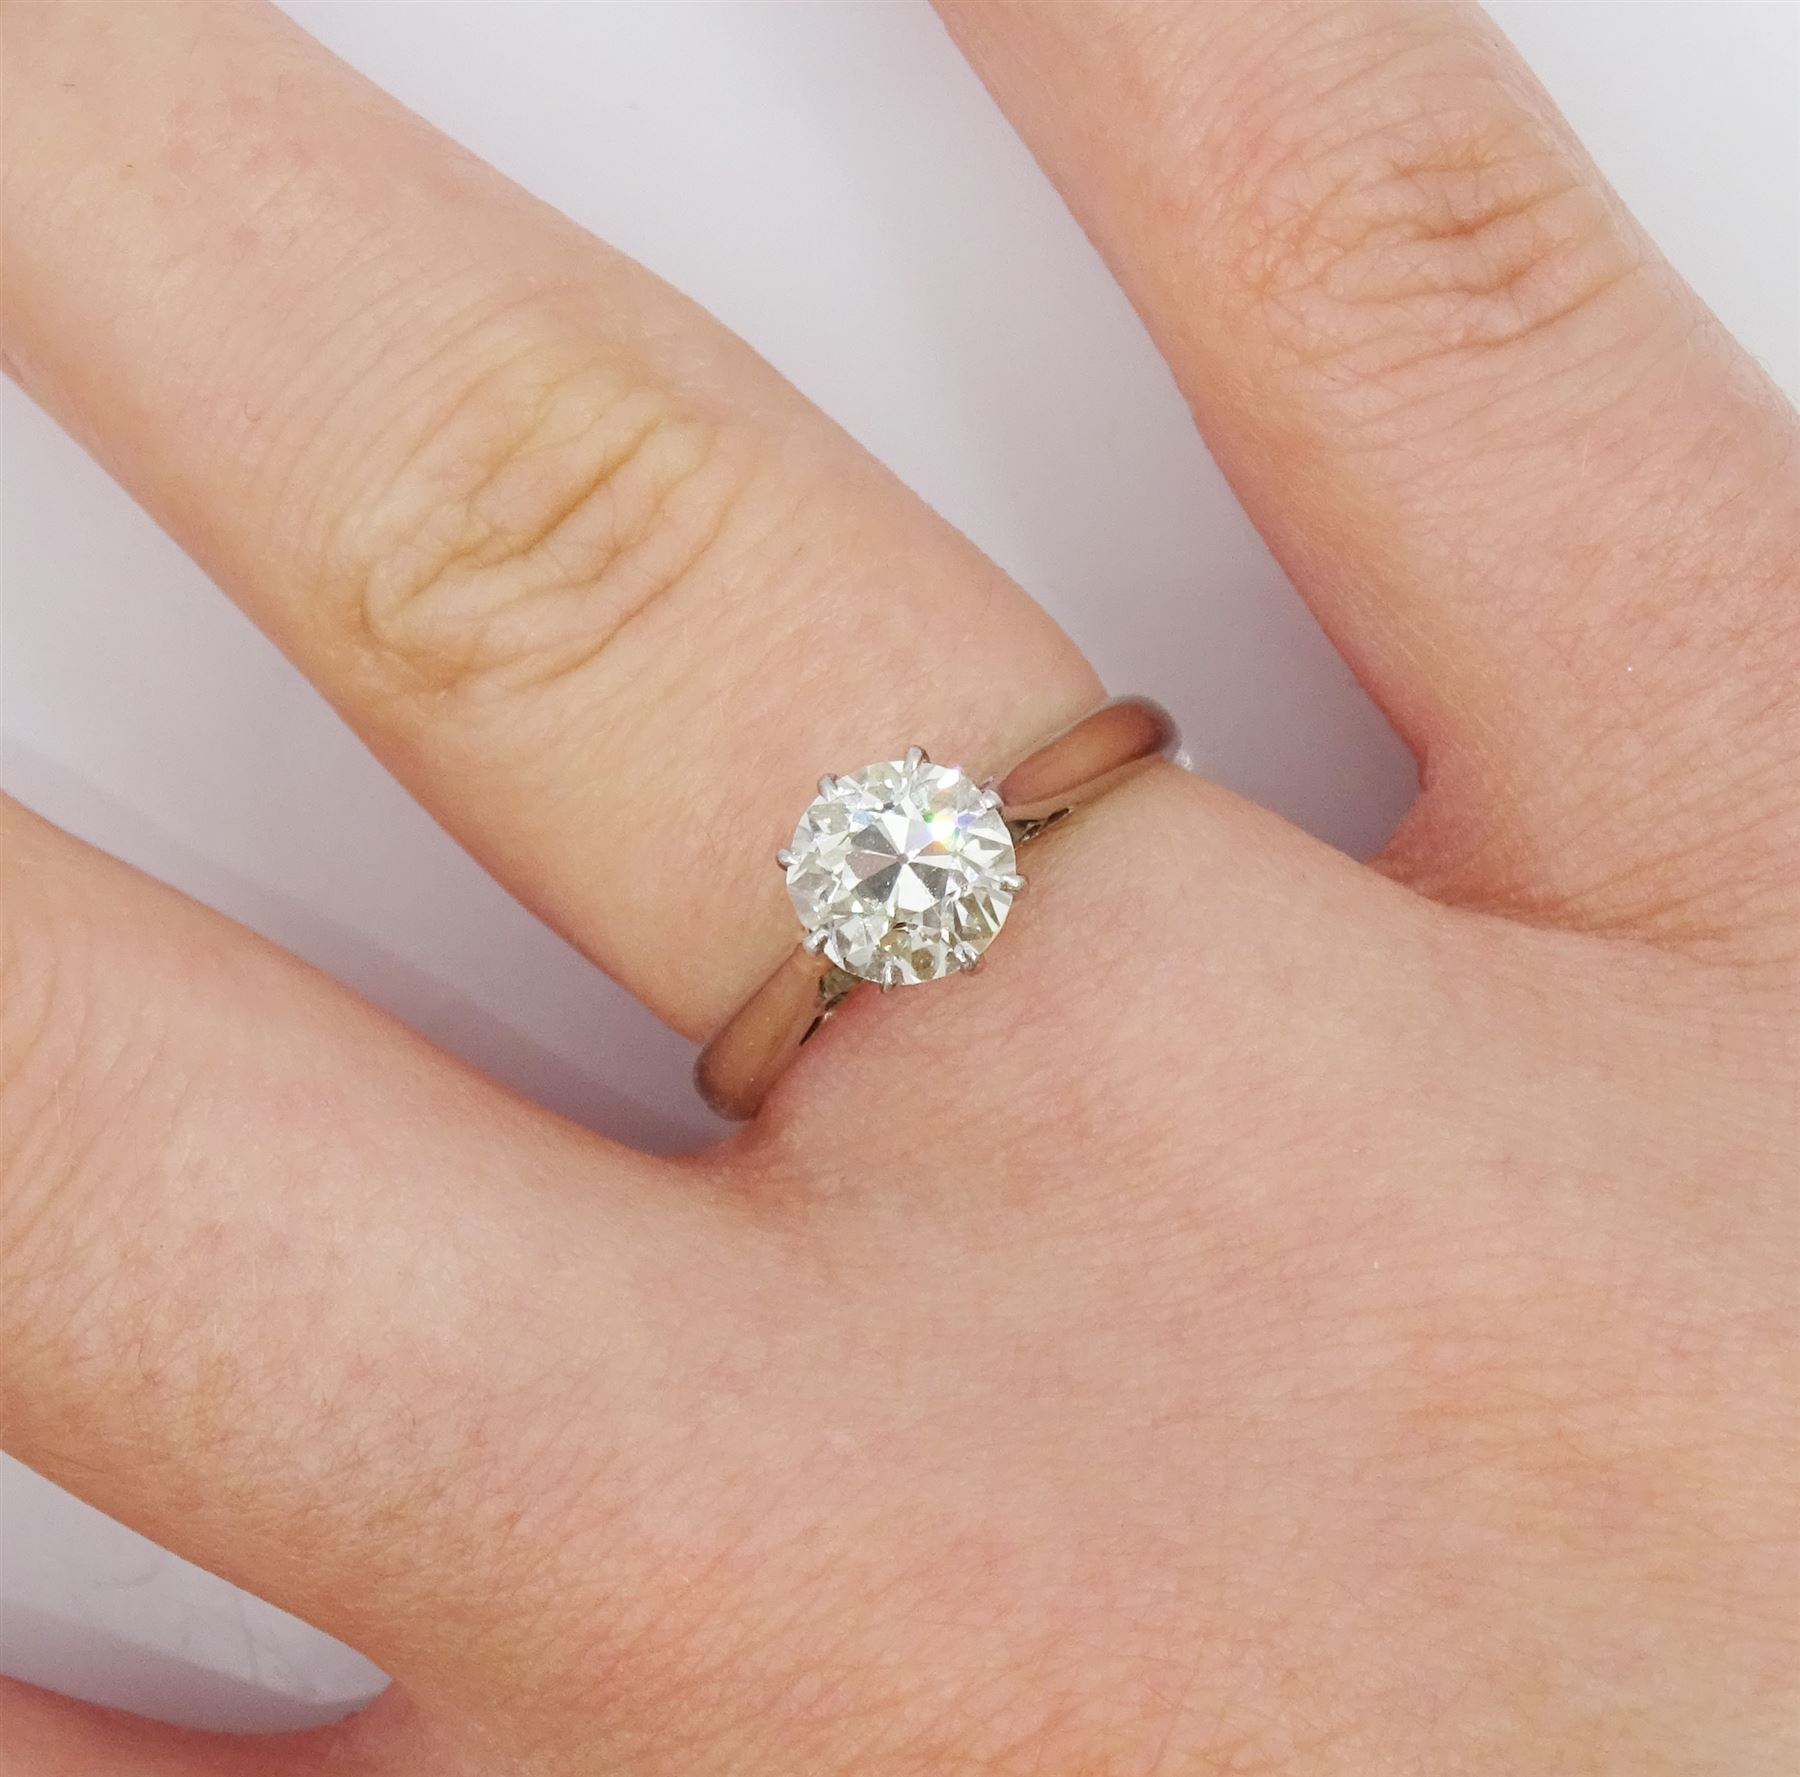 White gold single stone old cut diamond ring - Image 2 of 4